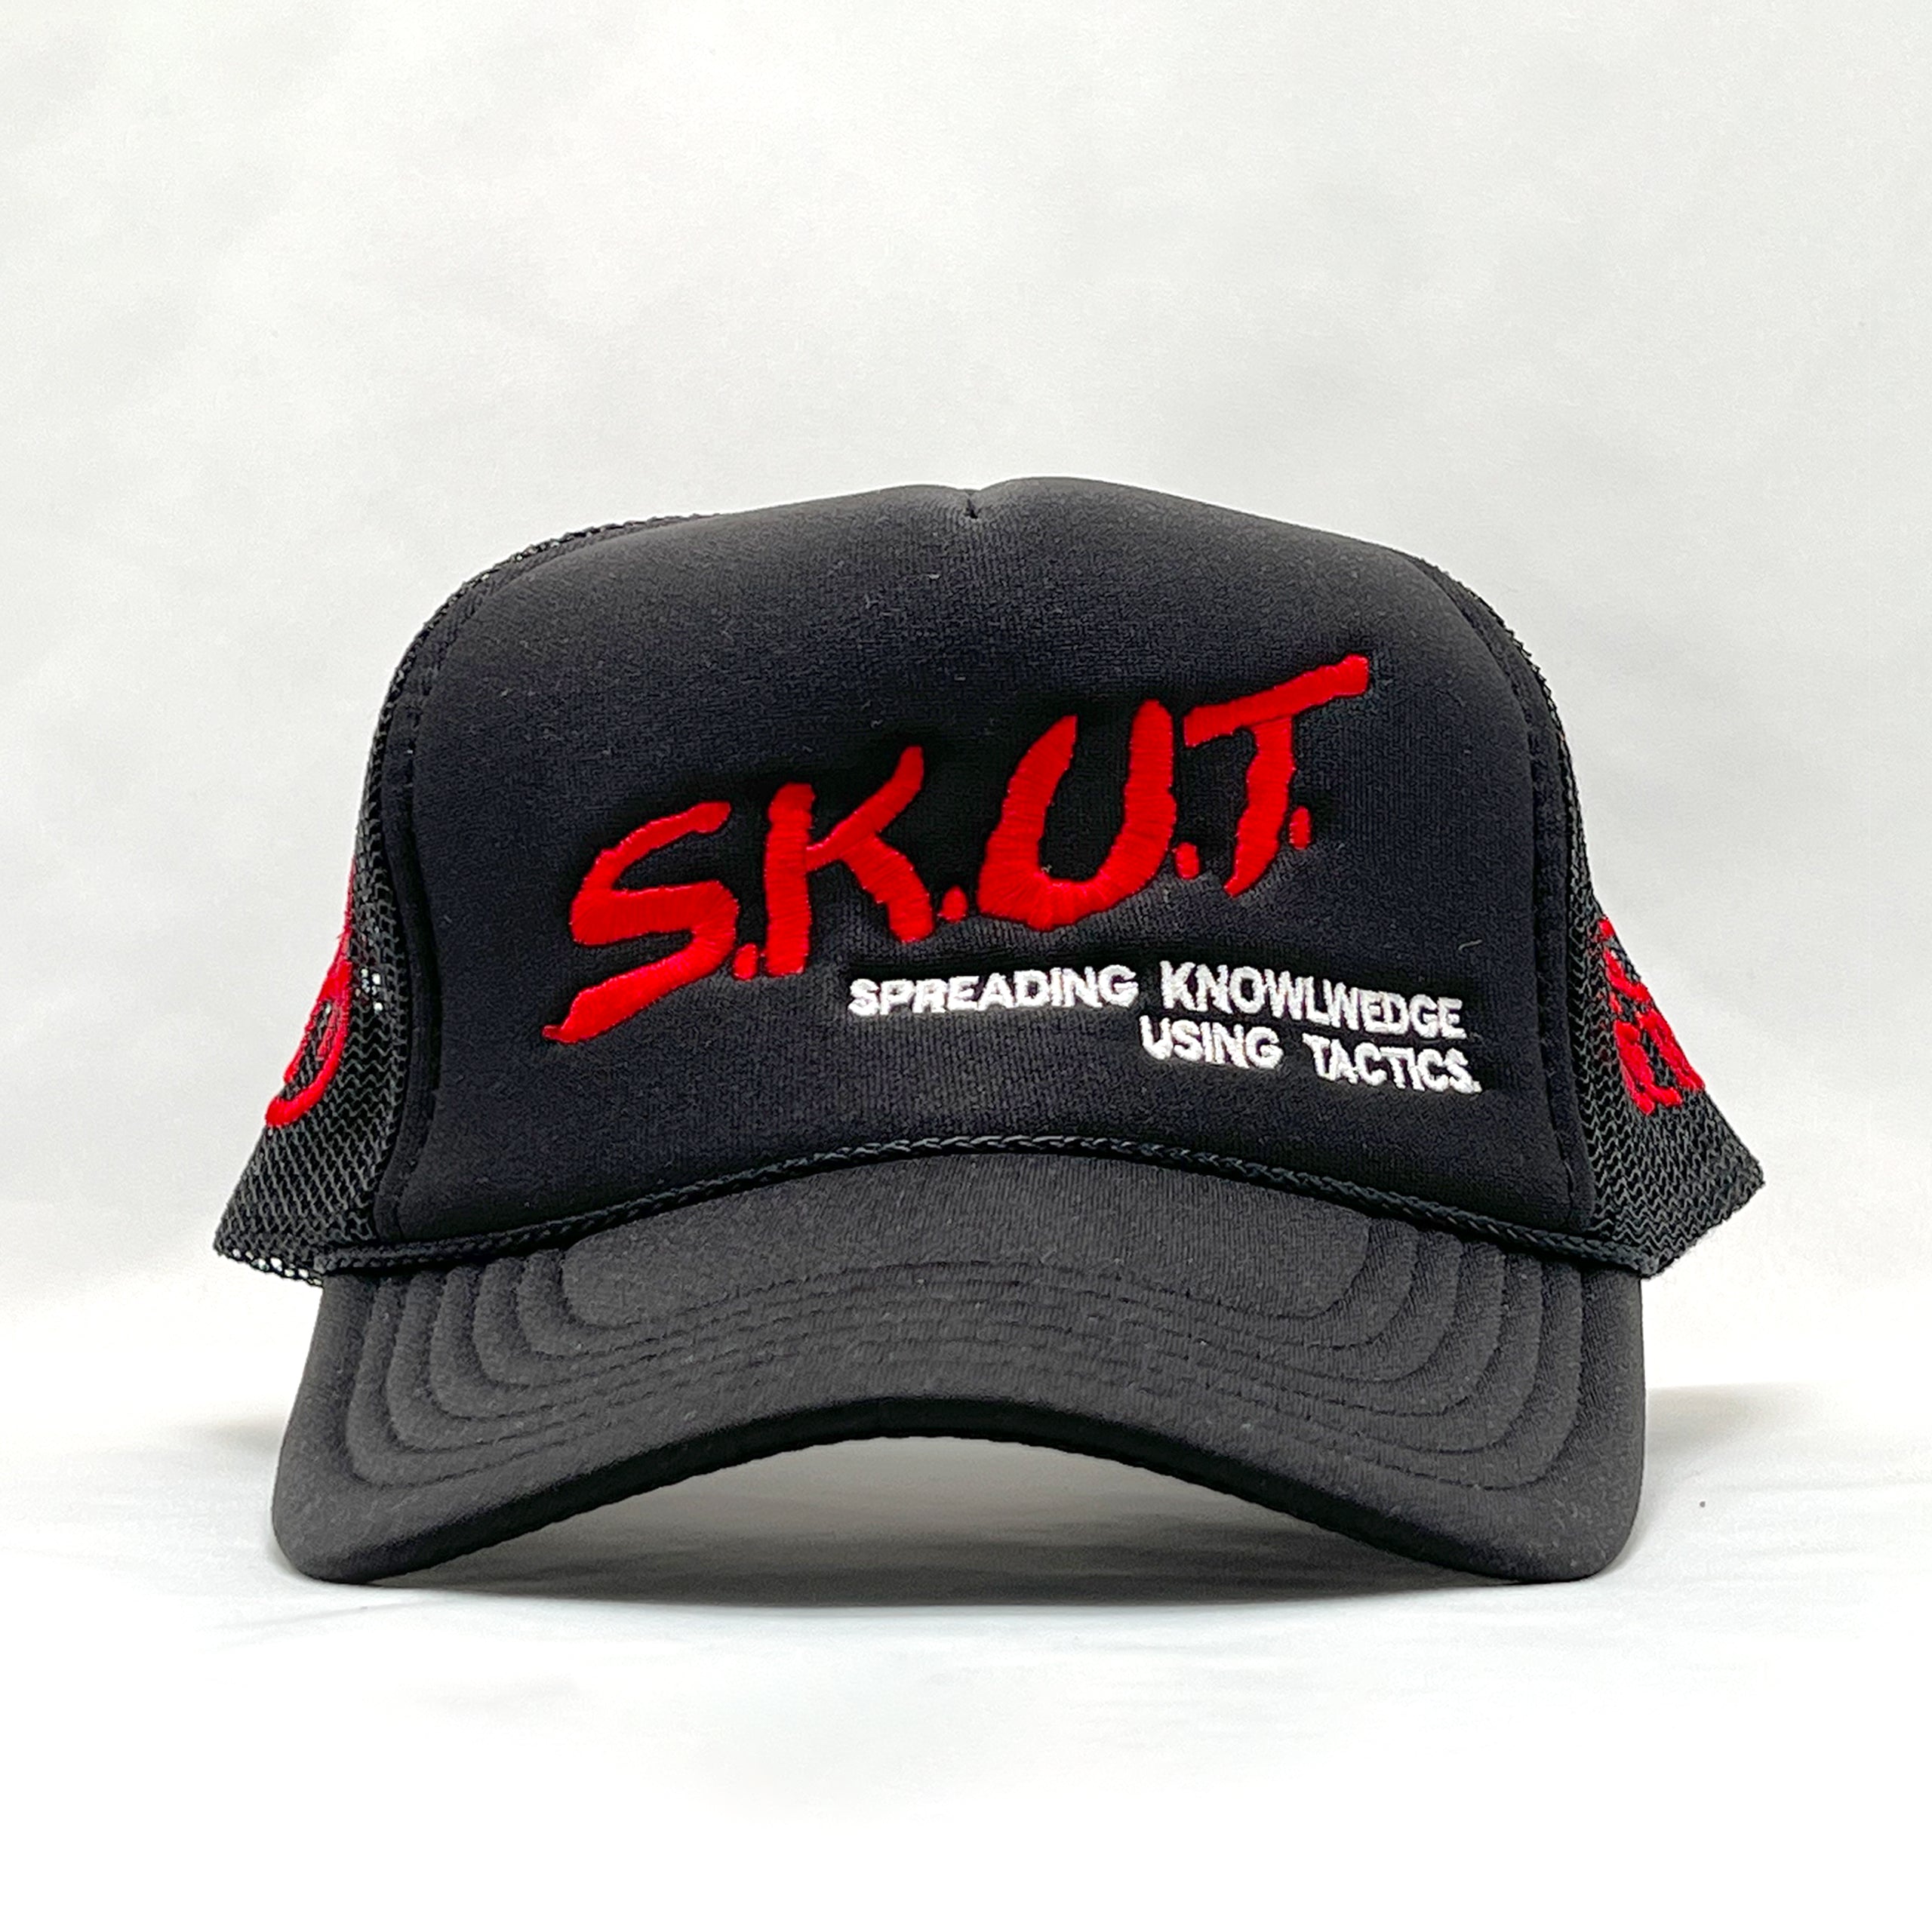 The S.K.U.T. Trucker Hat